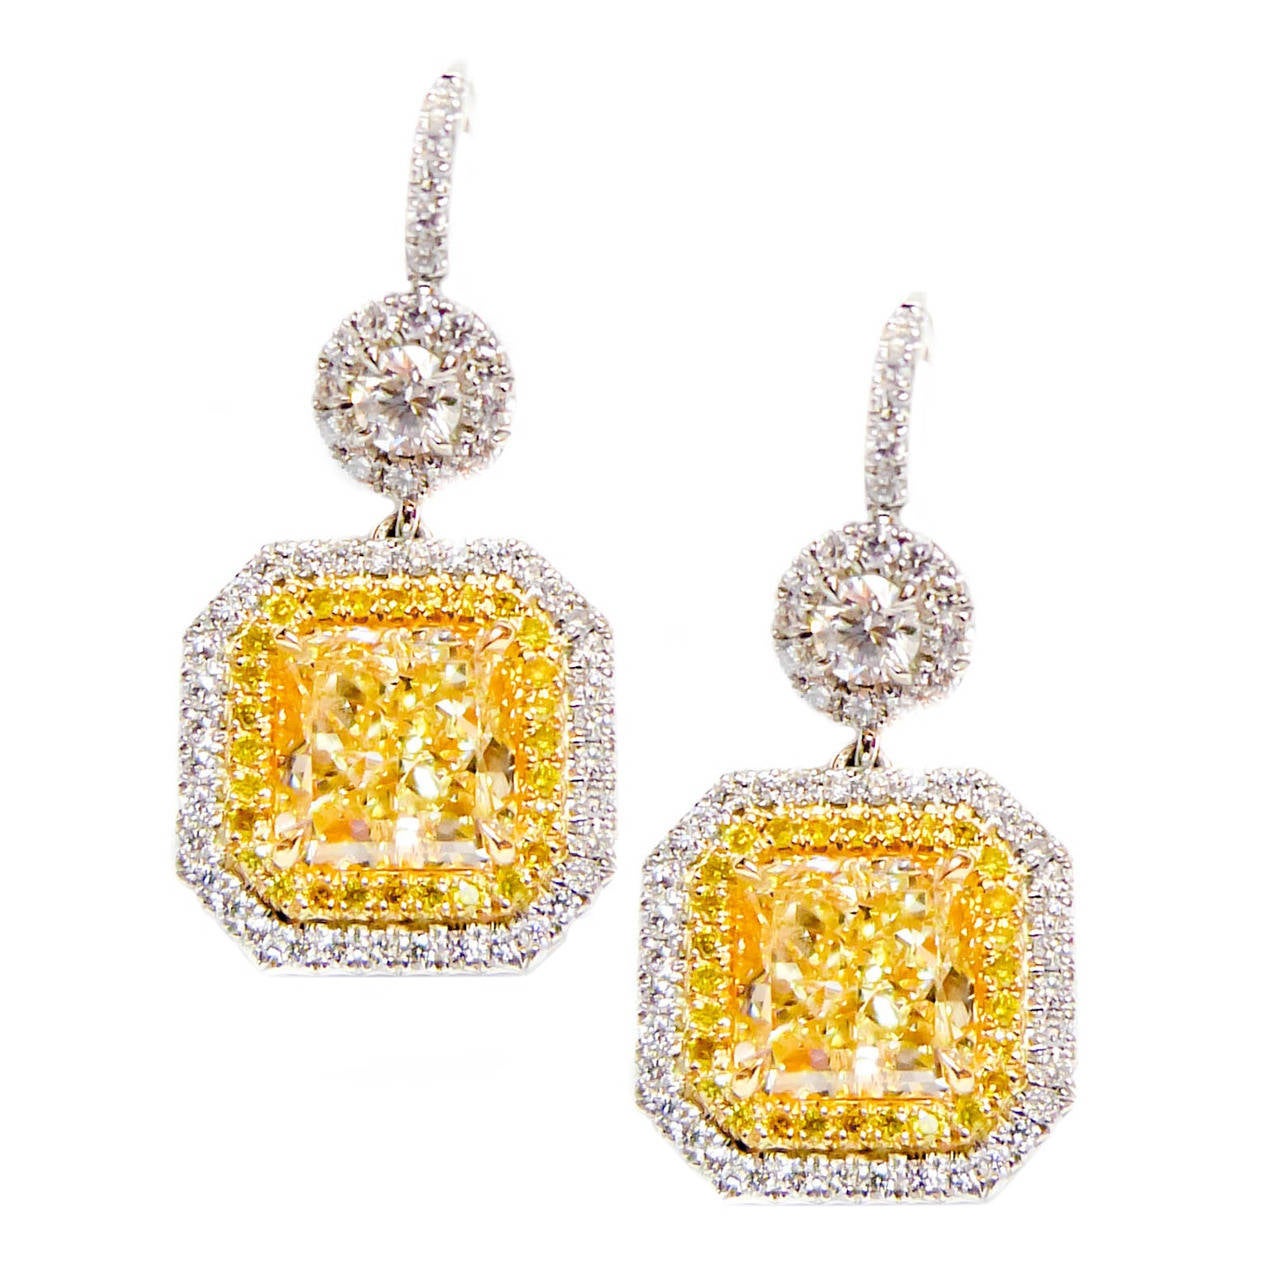 Elegant and Classic Fancy Yellow Diamond Earrings